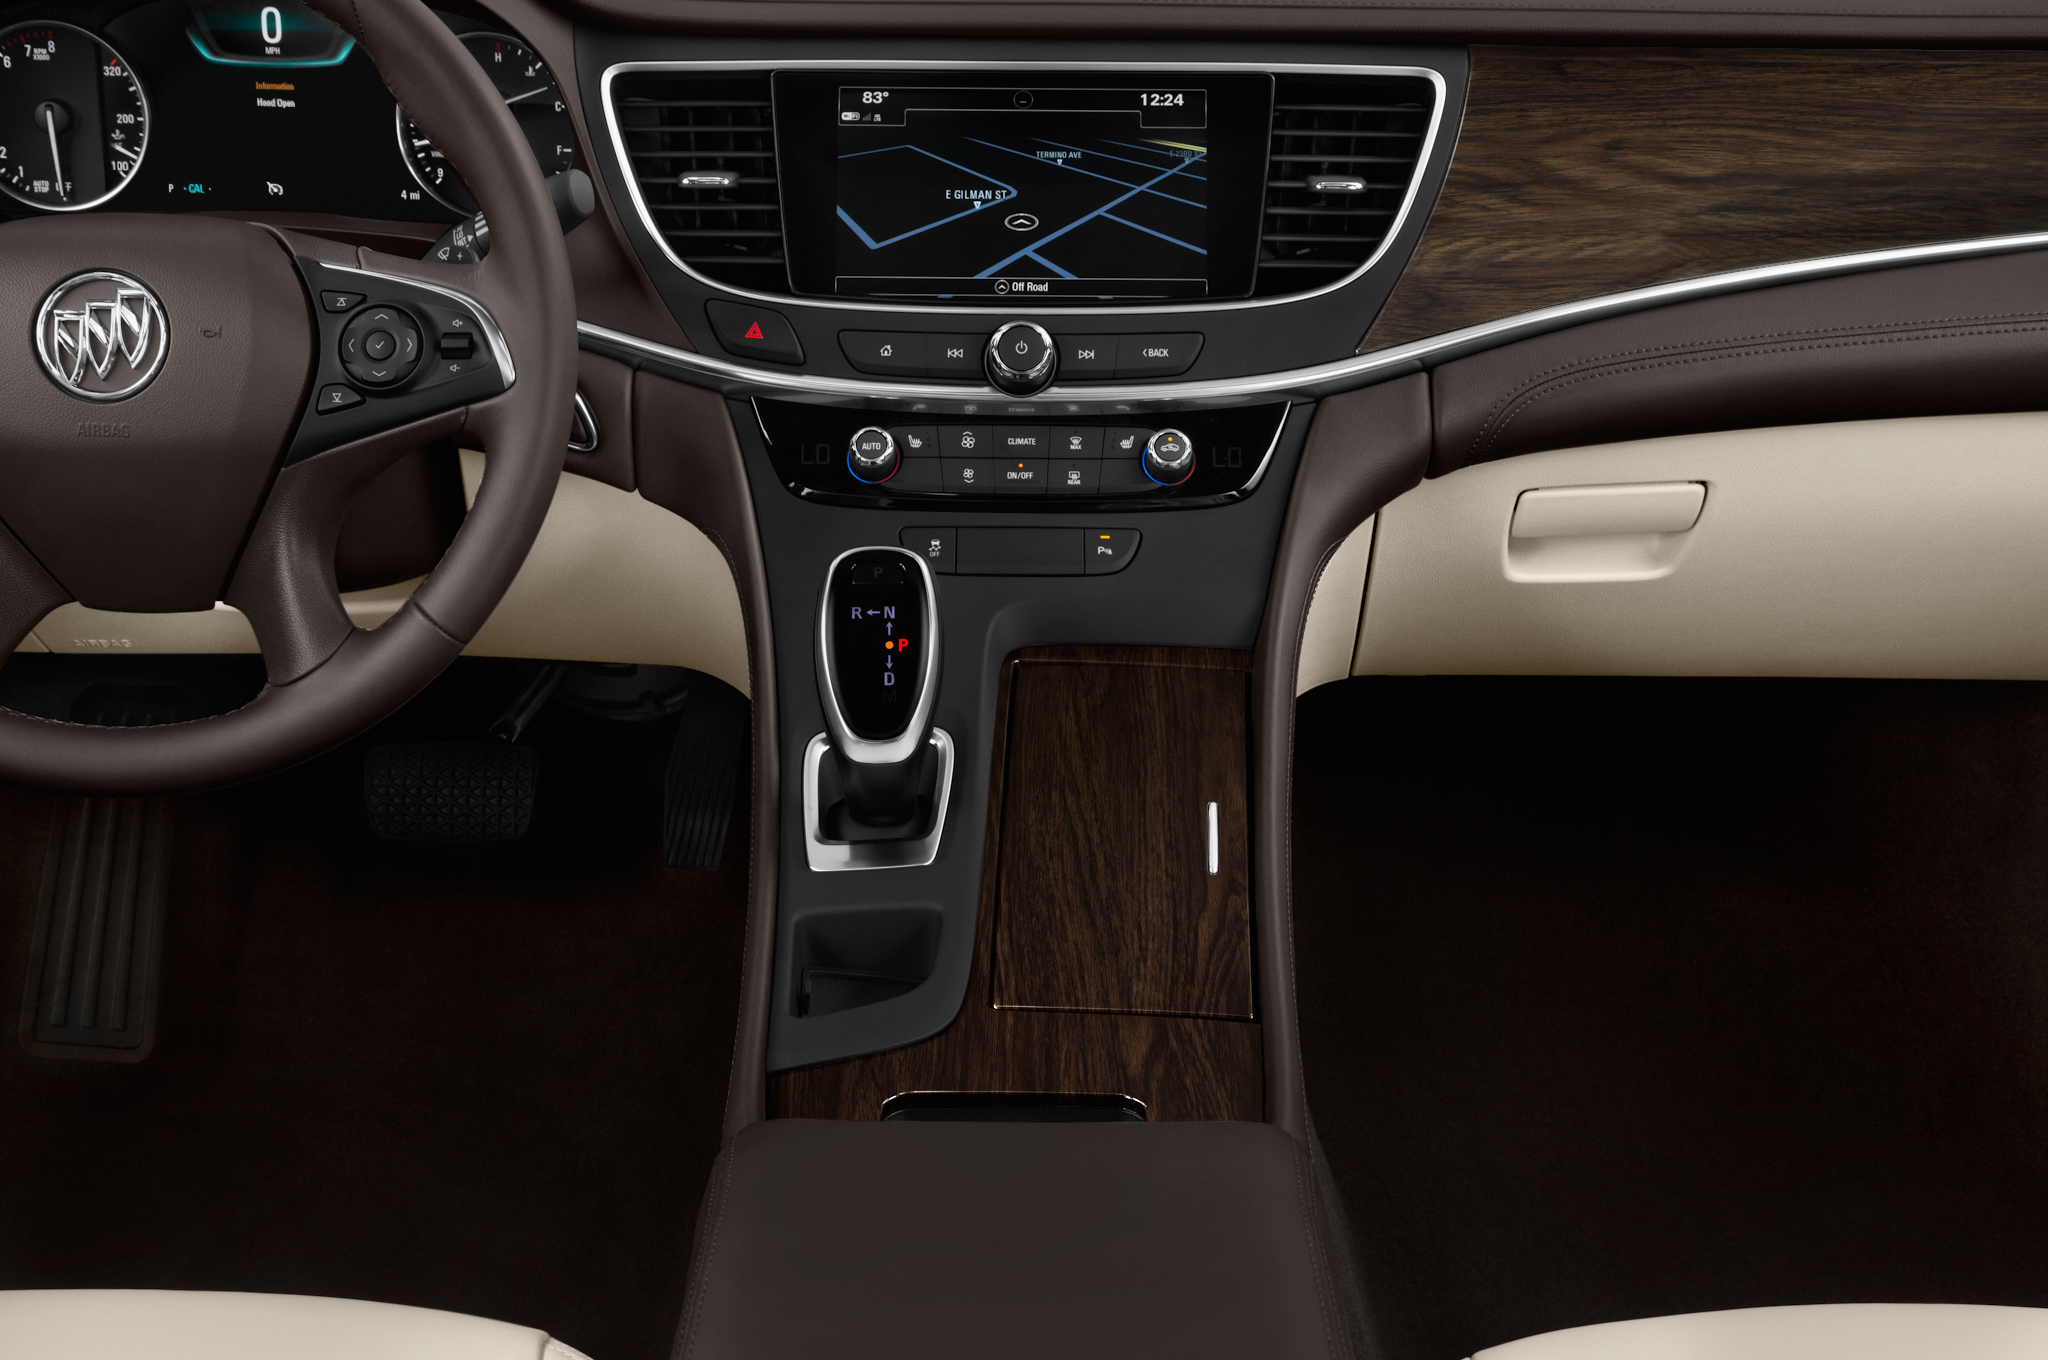 Buick LaCrosse Backgrounds, Compatible - PC, Mobile, Gadgets| 2048x1360 px